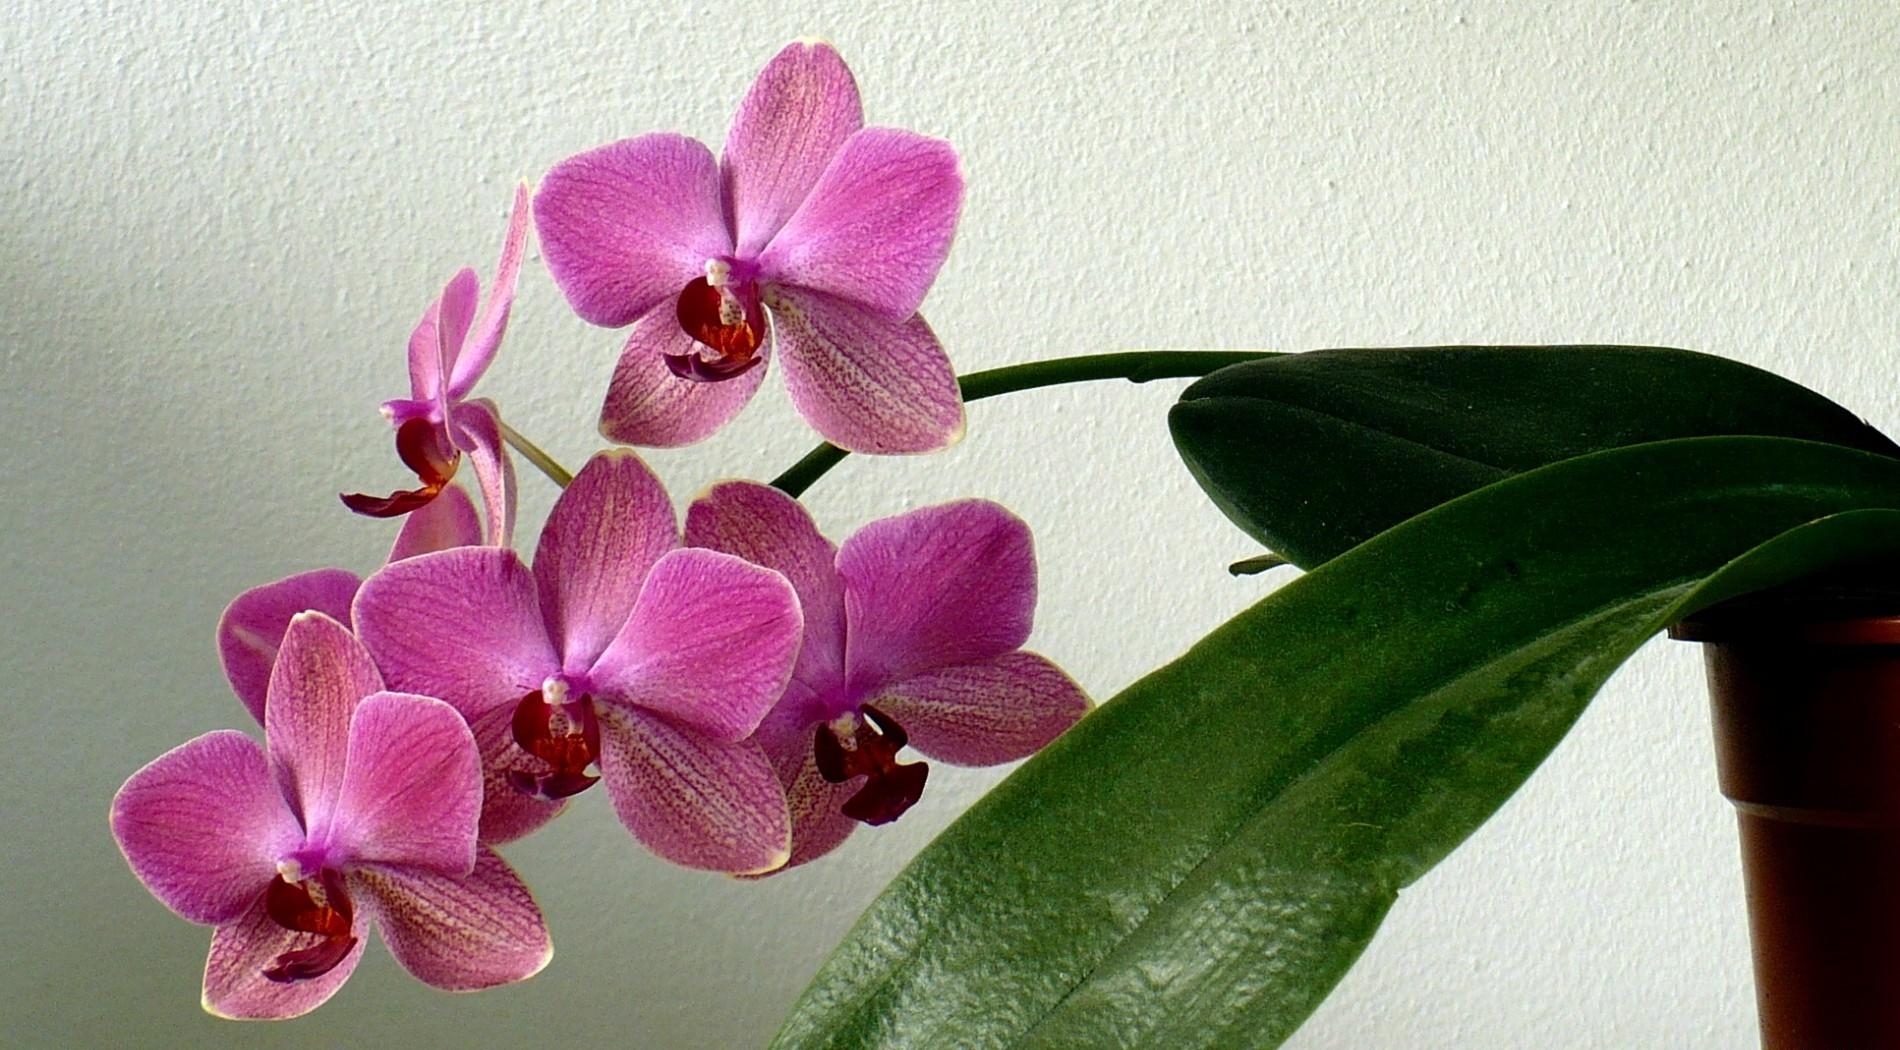 126670 descargar imagen orquídea, flores, flor, folleto, maceta, olla, madre, tallo: fondos de pantalla y protectores de pantalla gratis